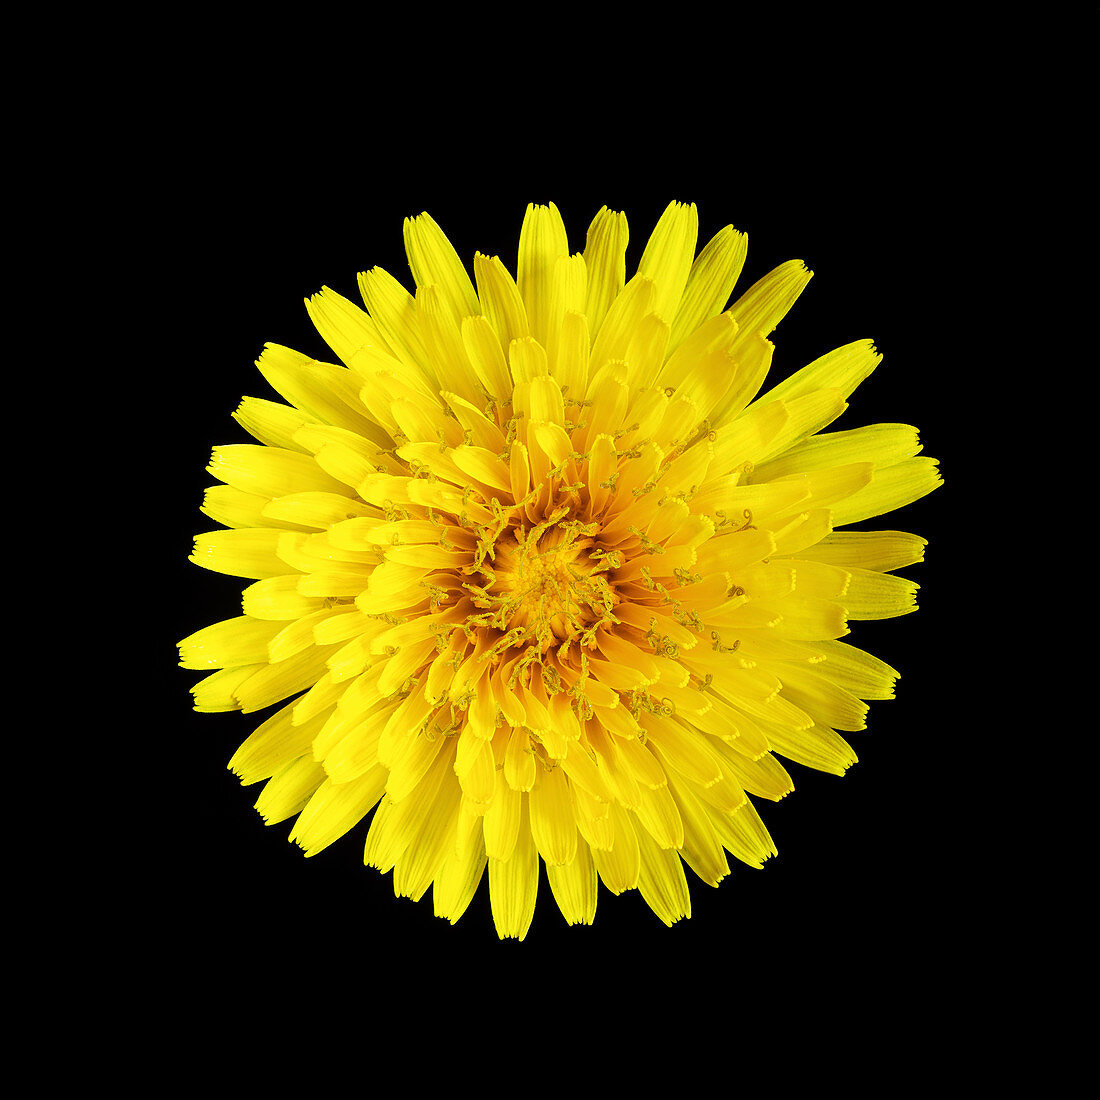 Dandelion (Taraxacum officinale) flower